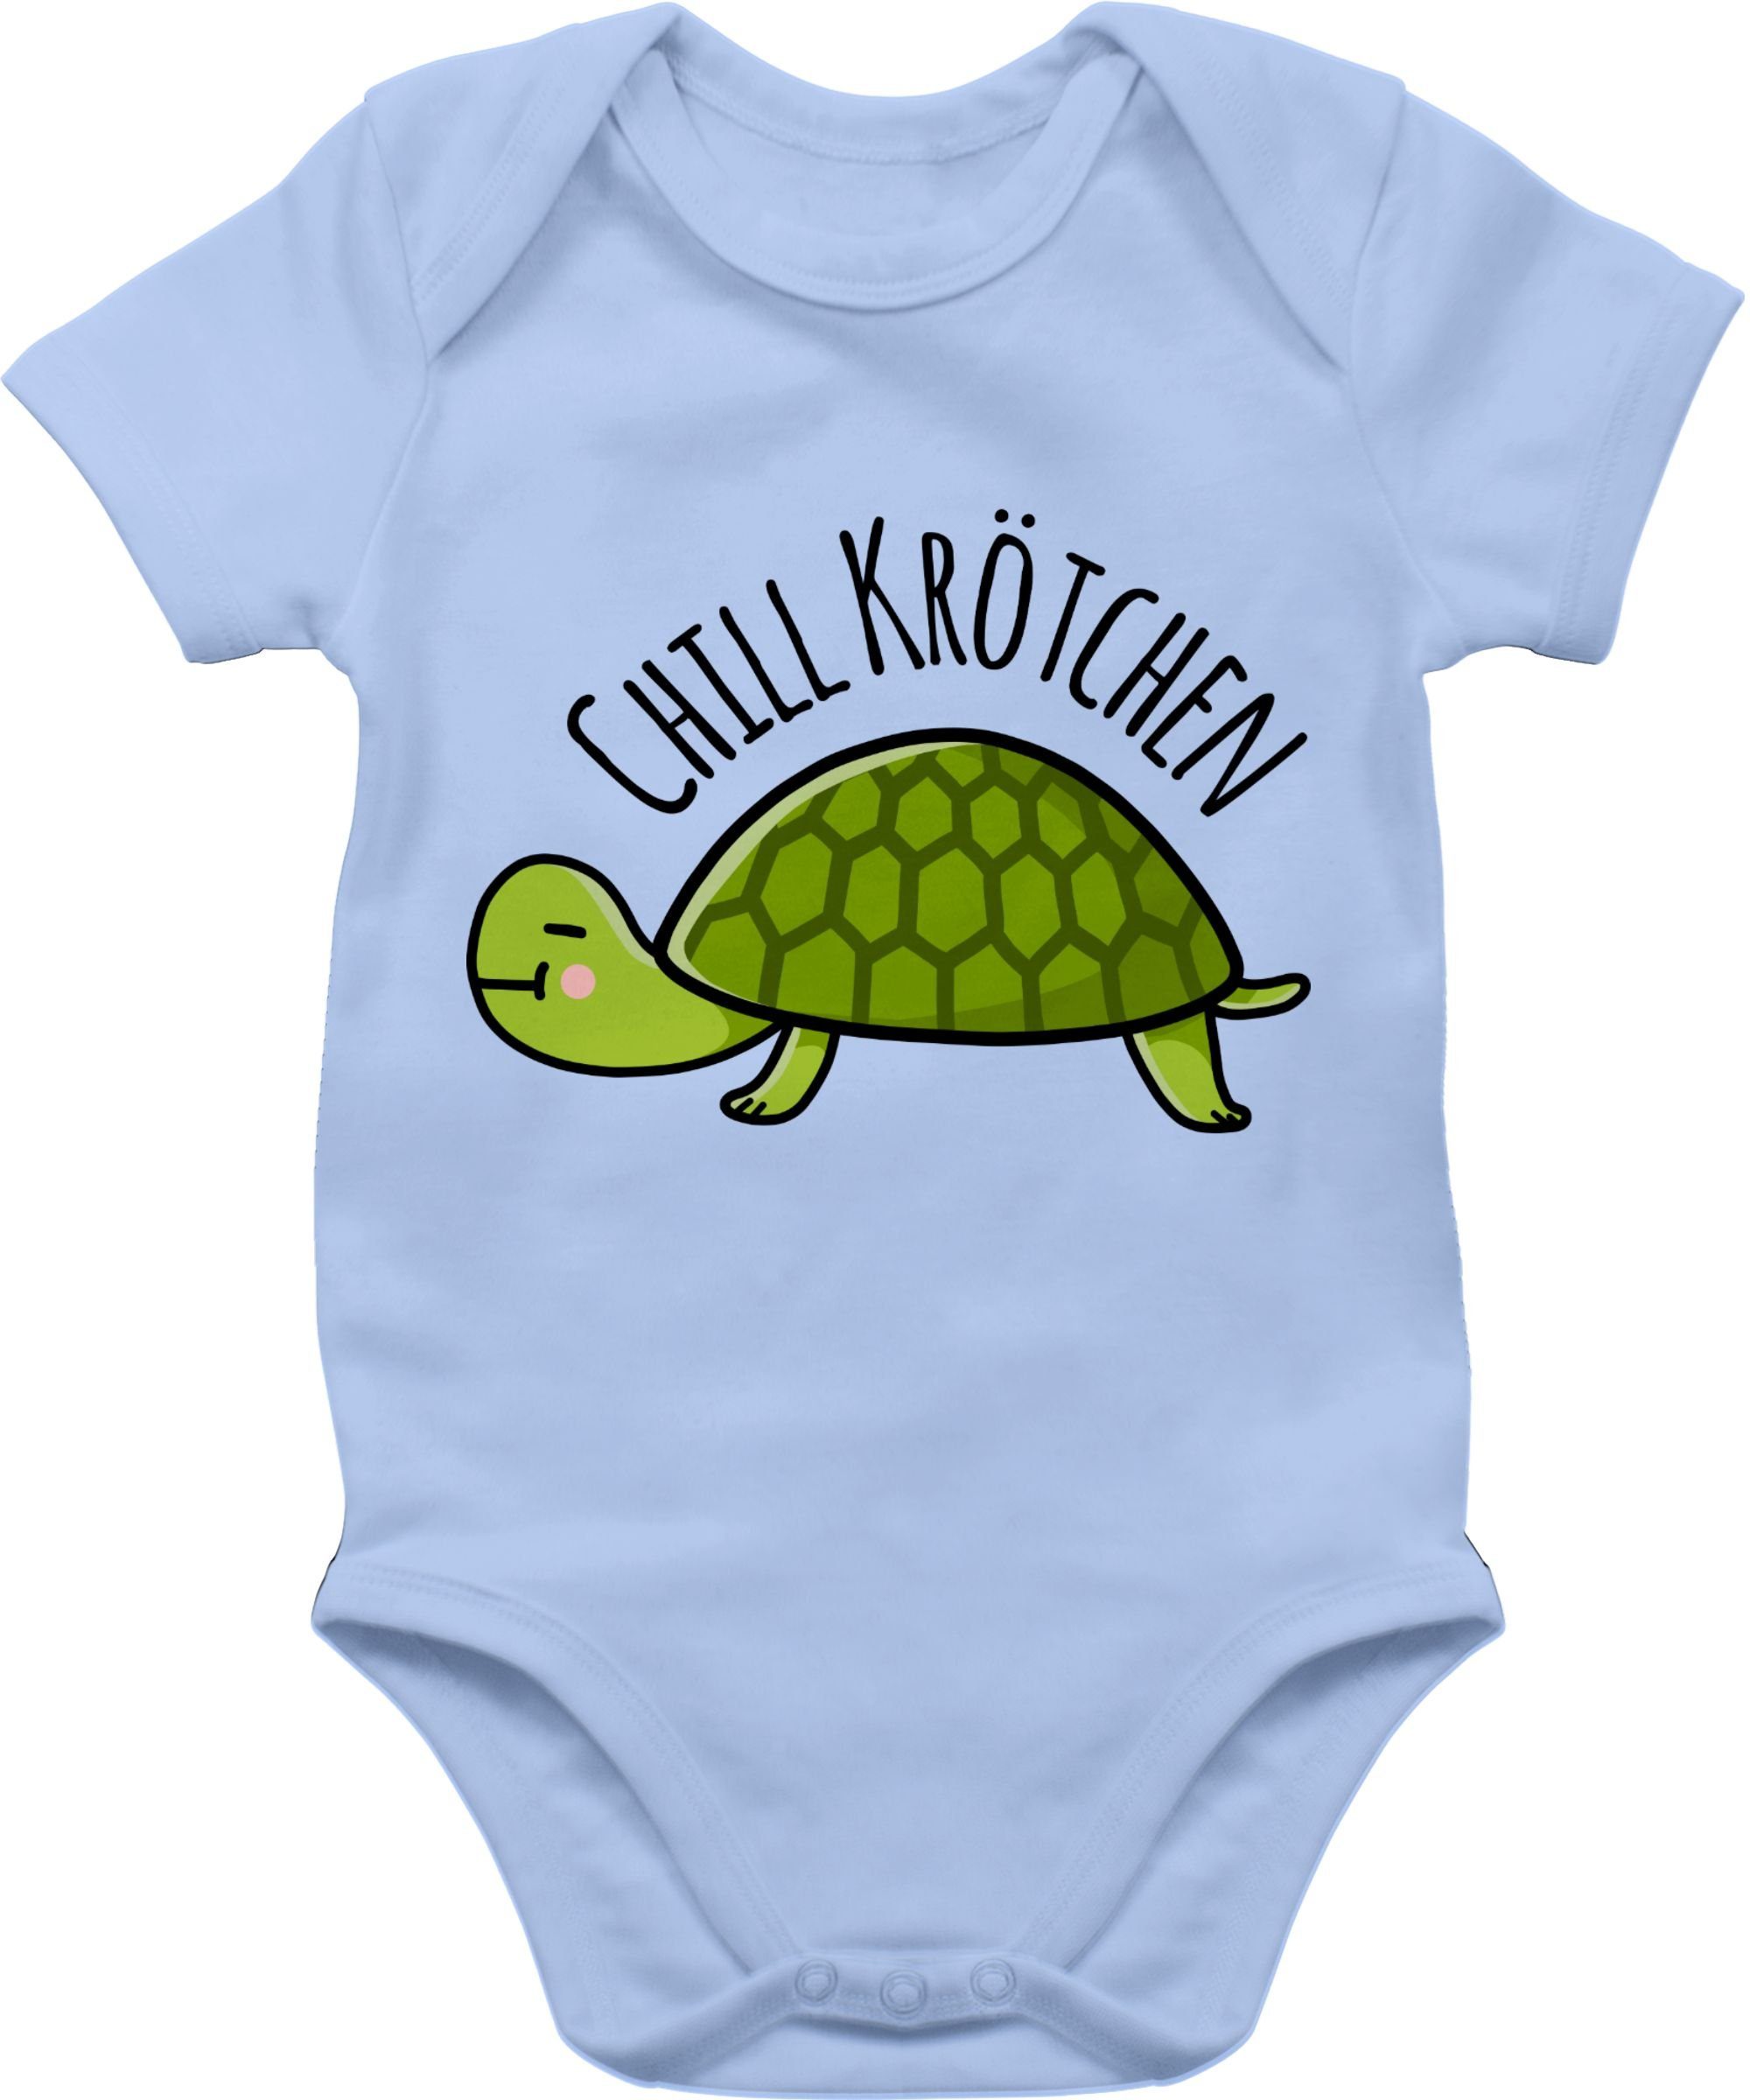 Shirtracer Shirtbody Chill Krötchen Schildkröte Tiermotiv Animal Print Baby 3 Babyblau